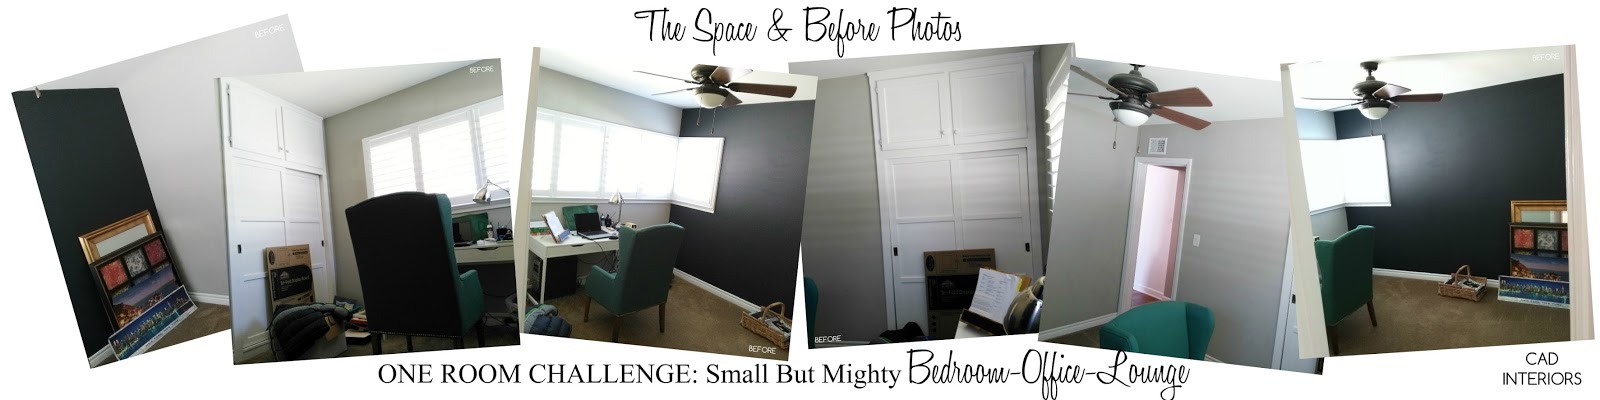 CAD INTERIORS bedroom study lounge room makeover home improvement interior design One Room Challenge